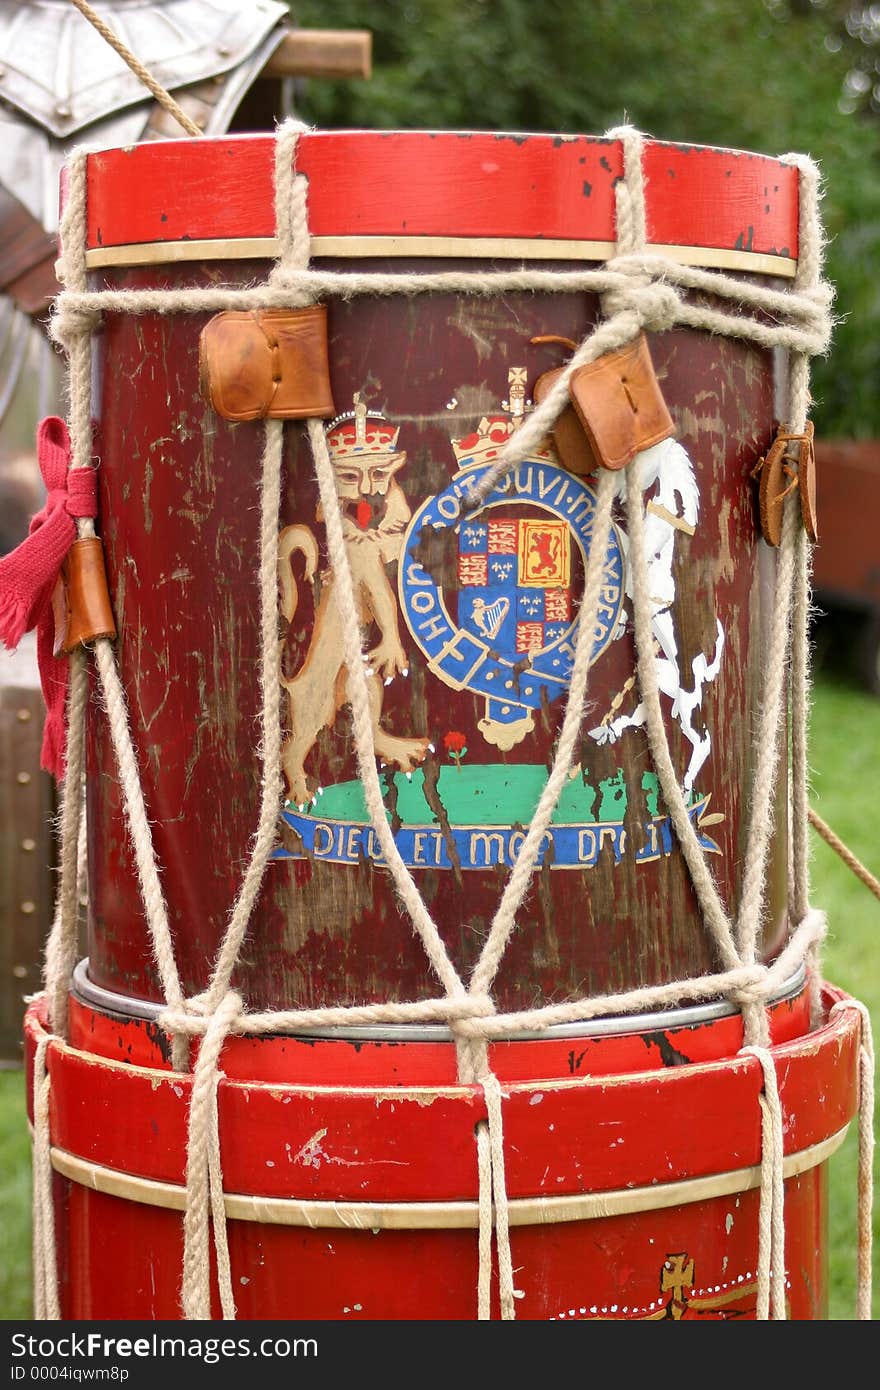 English civil war marching drum. 17th century.